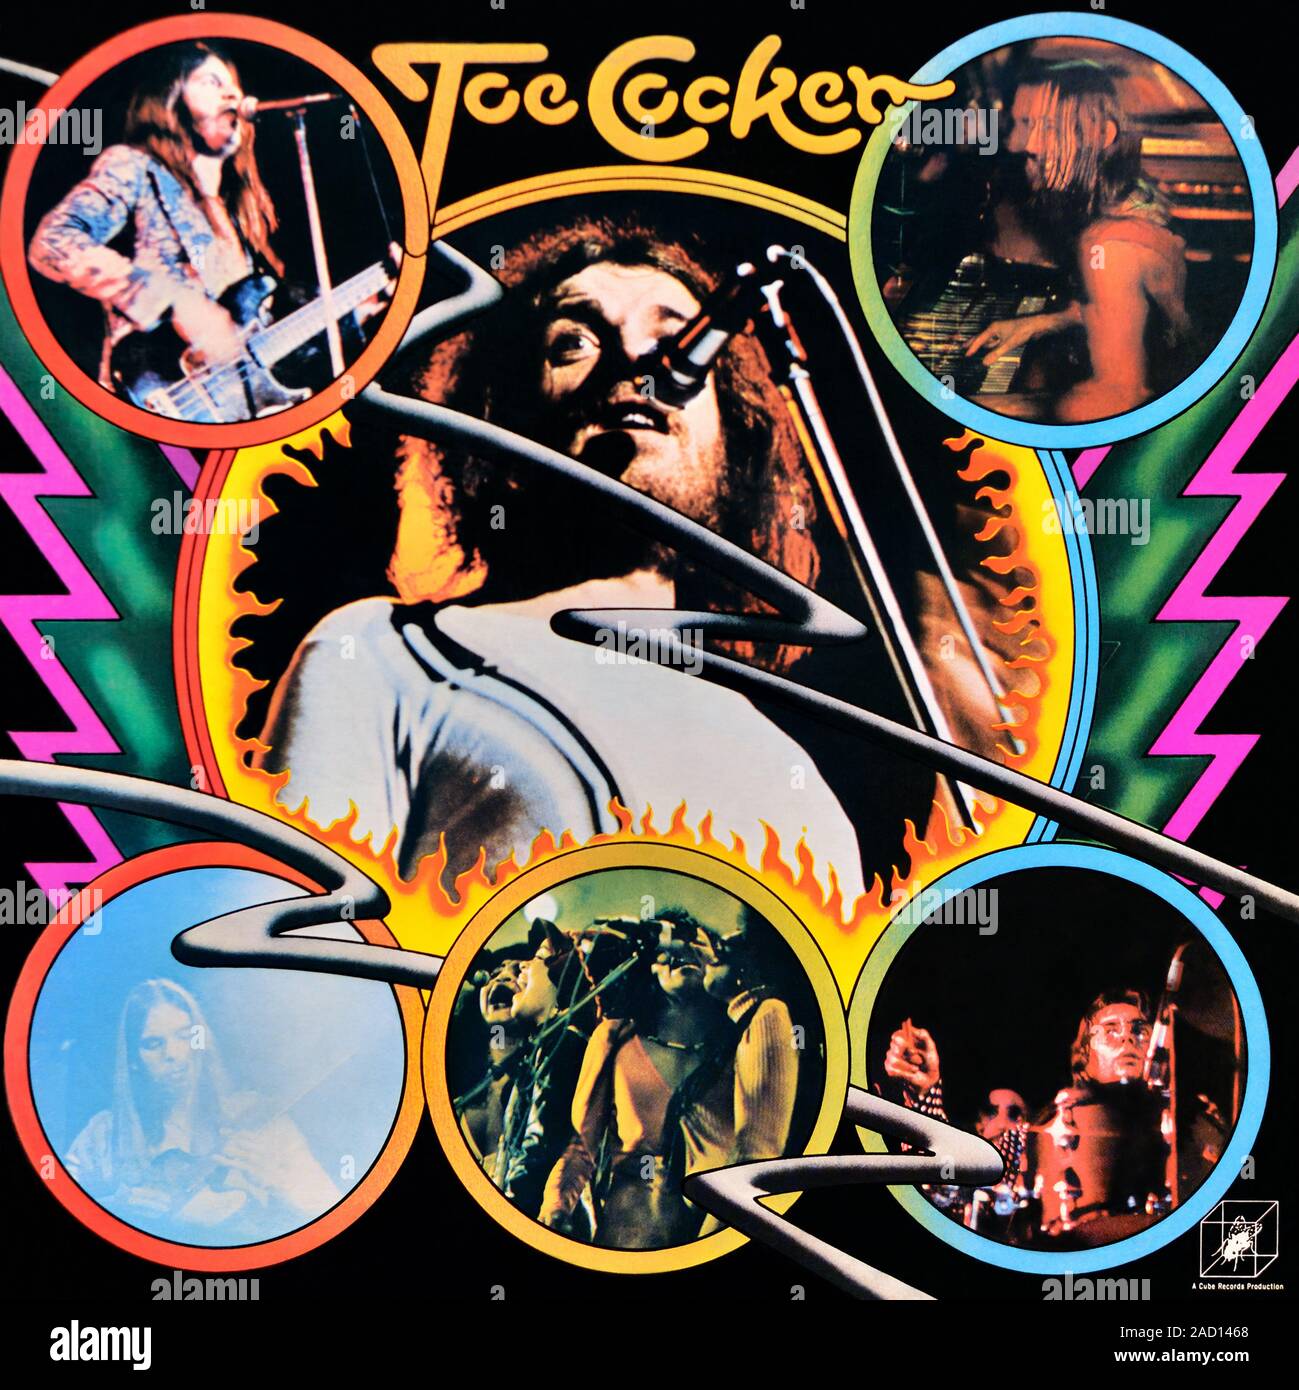 Joe Cocker - original vinyl album cover - Joe Cocker - 1972 Stock Photo